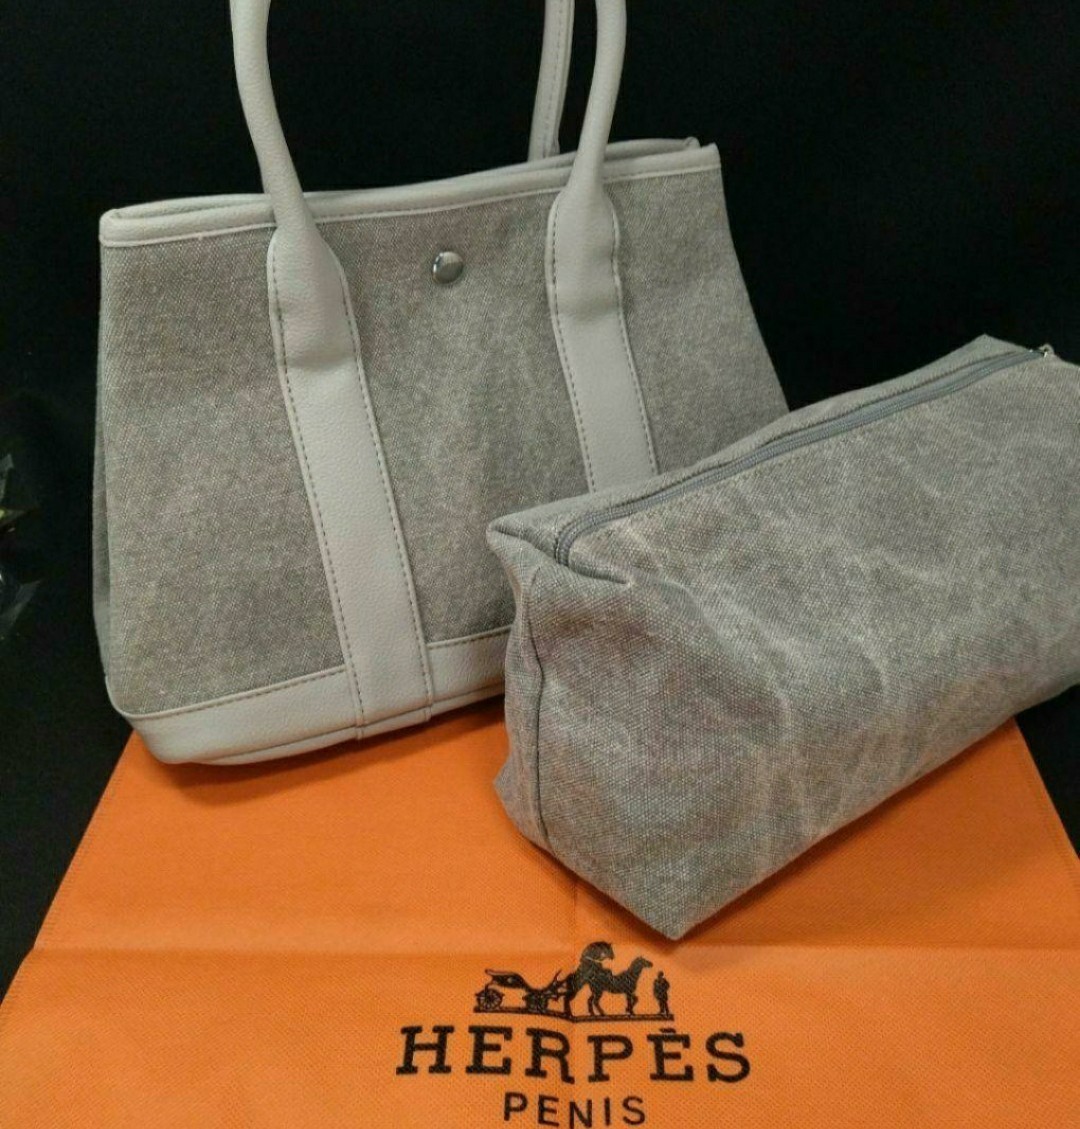 【 новый товар  неиспользуемый 】HERPES PENIS ... ...   серый   рука  задний  OMECO ...  сумка   сумка  ... ...